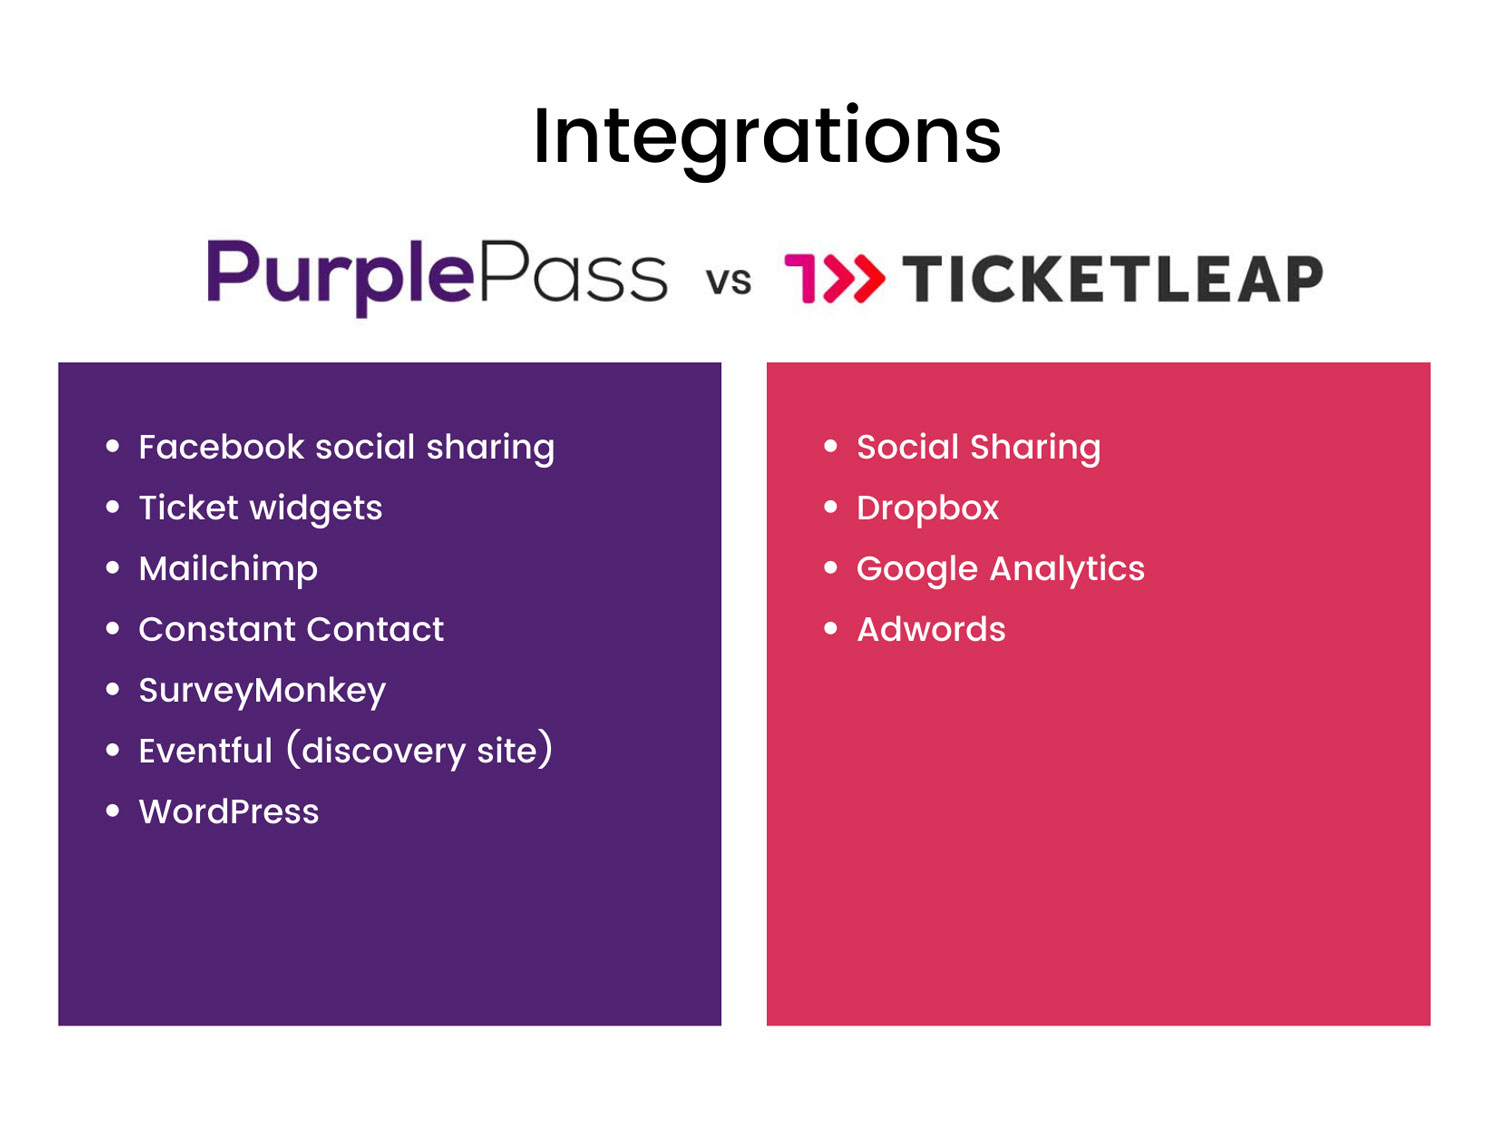 INTEGRATION-purplepass-vs-ticketleap